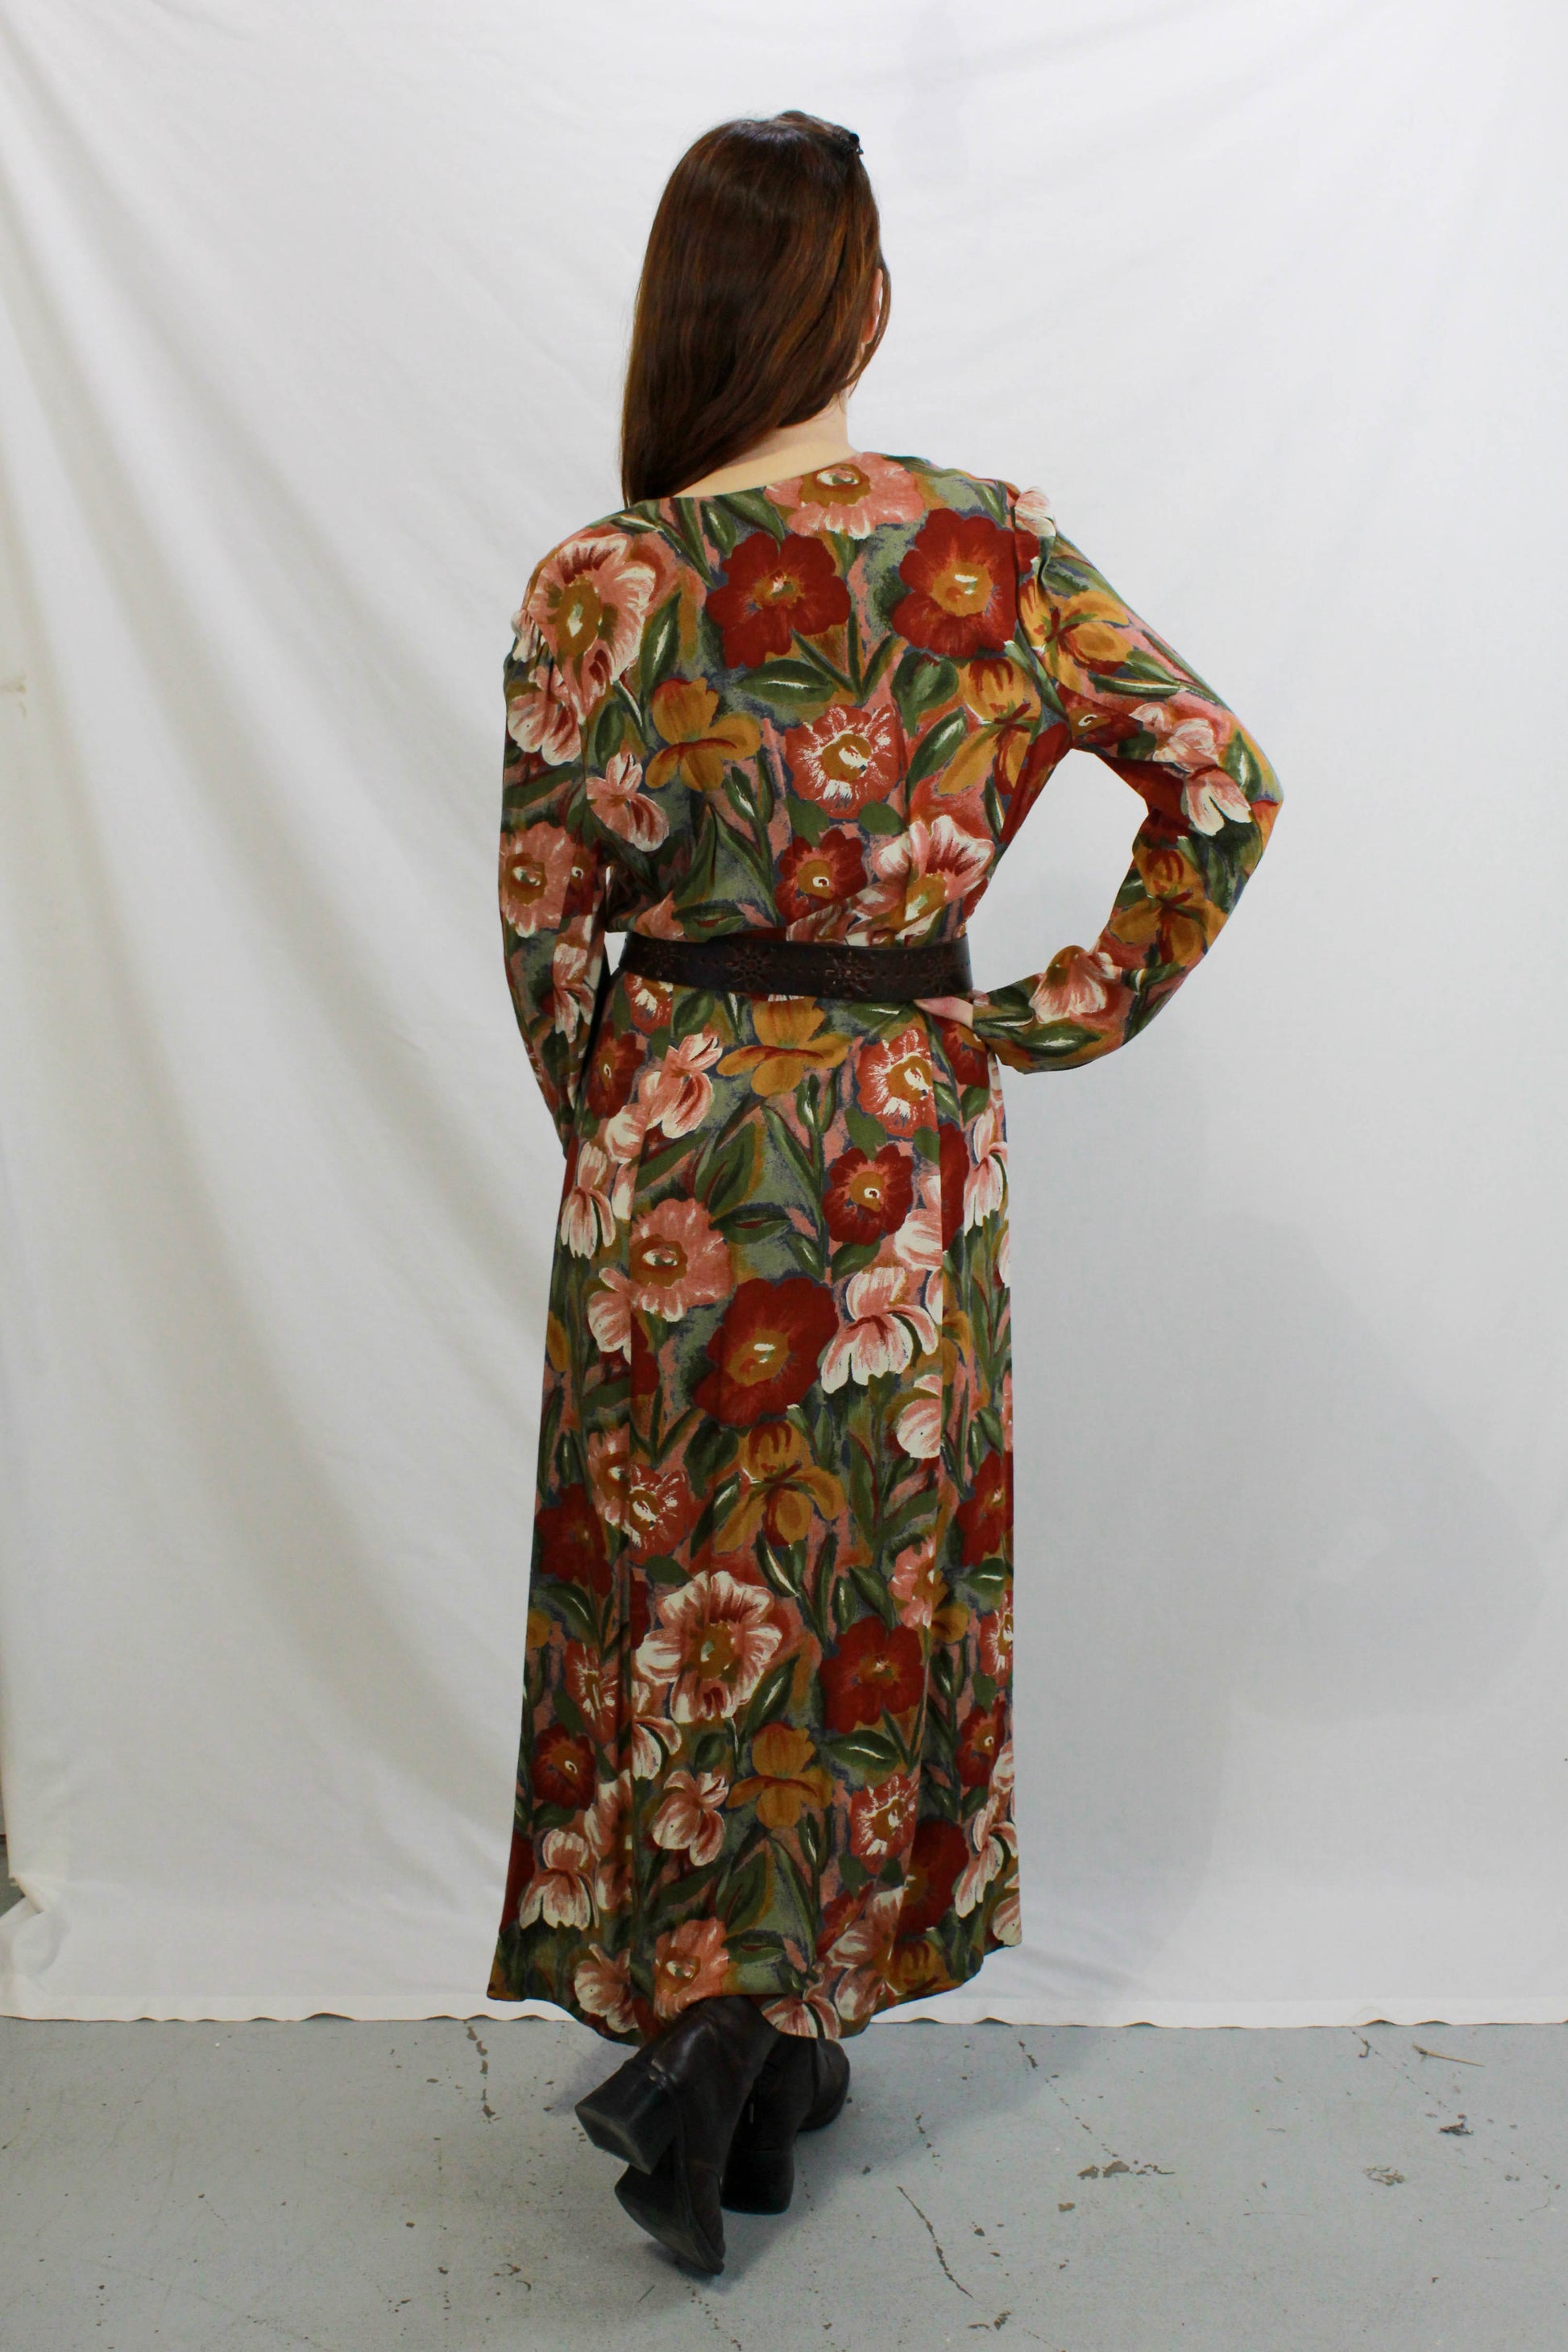 1990s Vintage Floral Rayon Maxi Dress, Button Front Women's 90s Dress